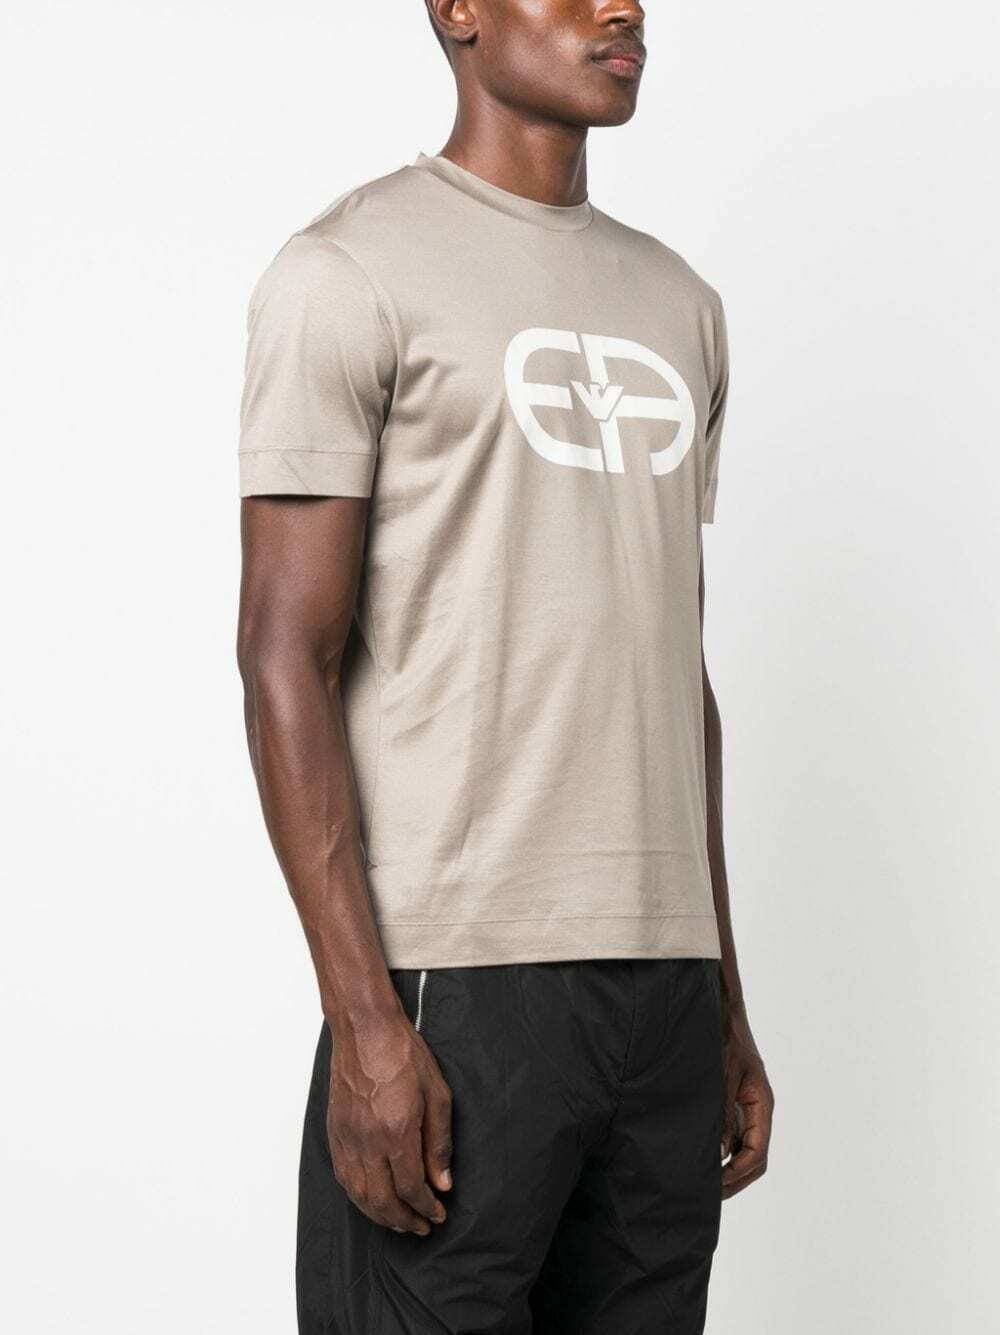 EMPORIO ARMANI - Logo Print T-shirt